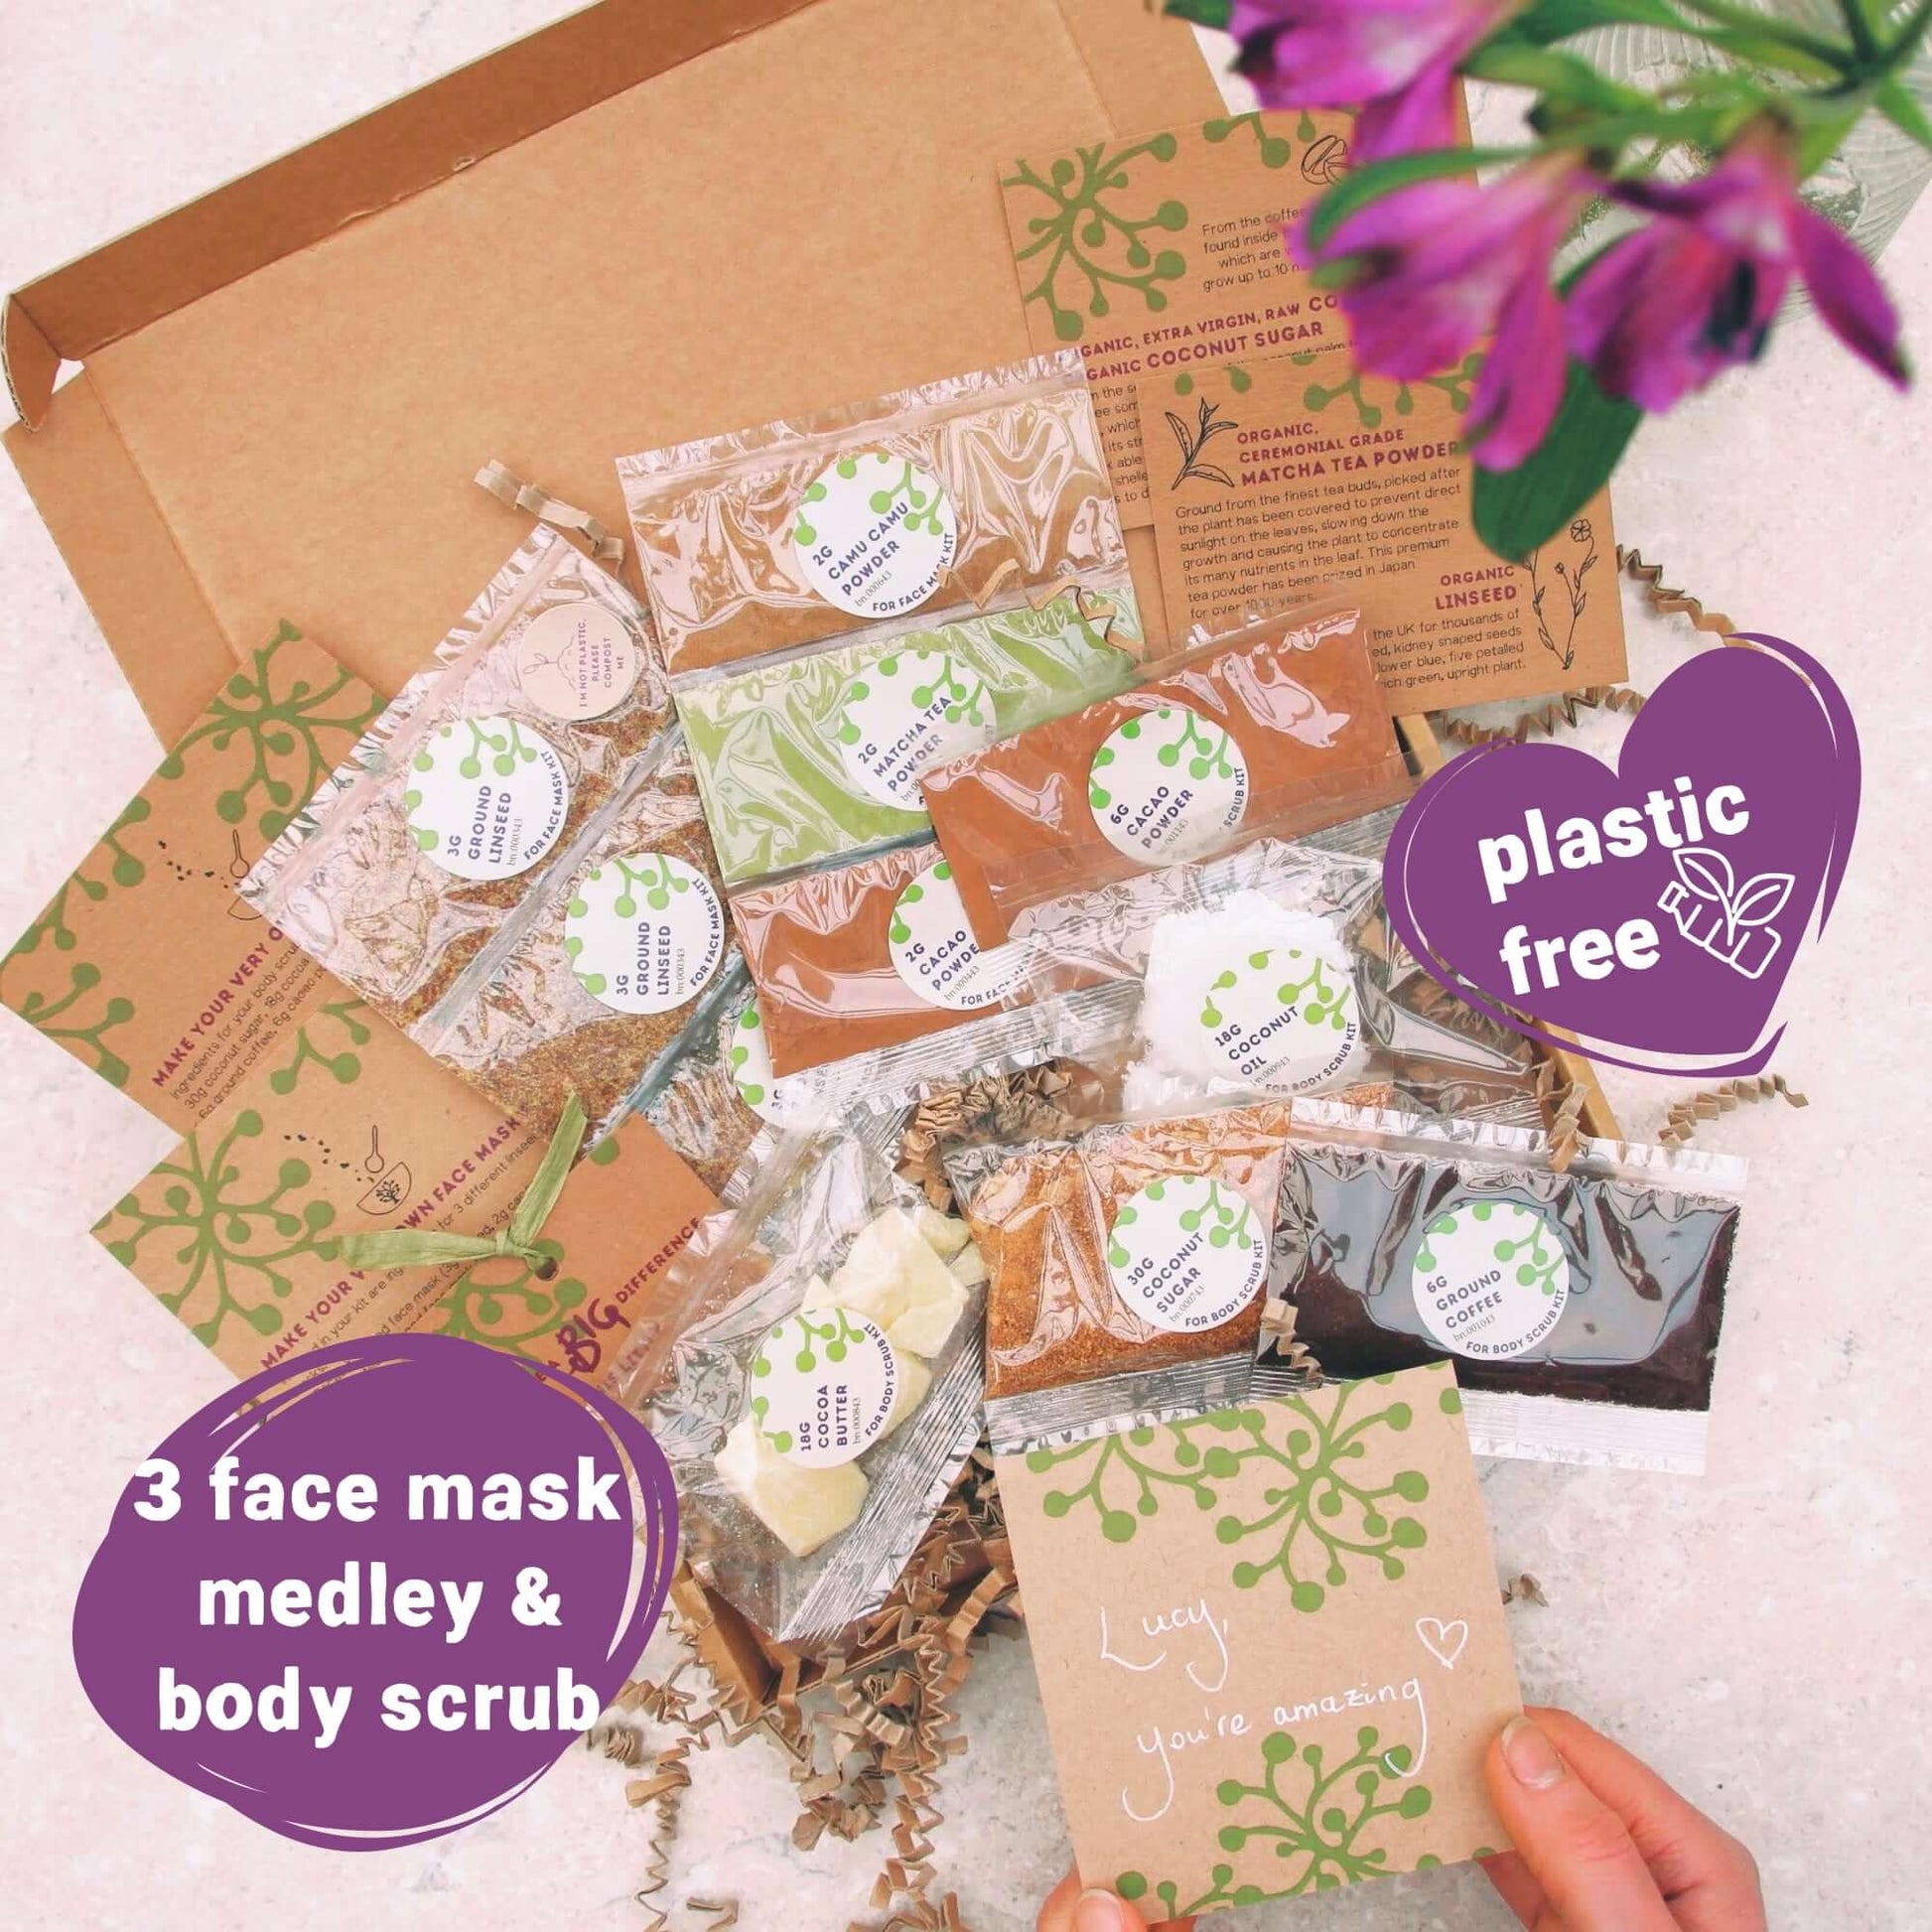 mum letterbox gift showing organic vegan face mask and body scrub kit